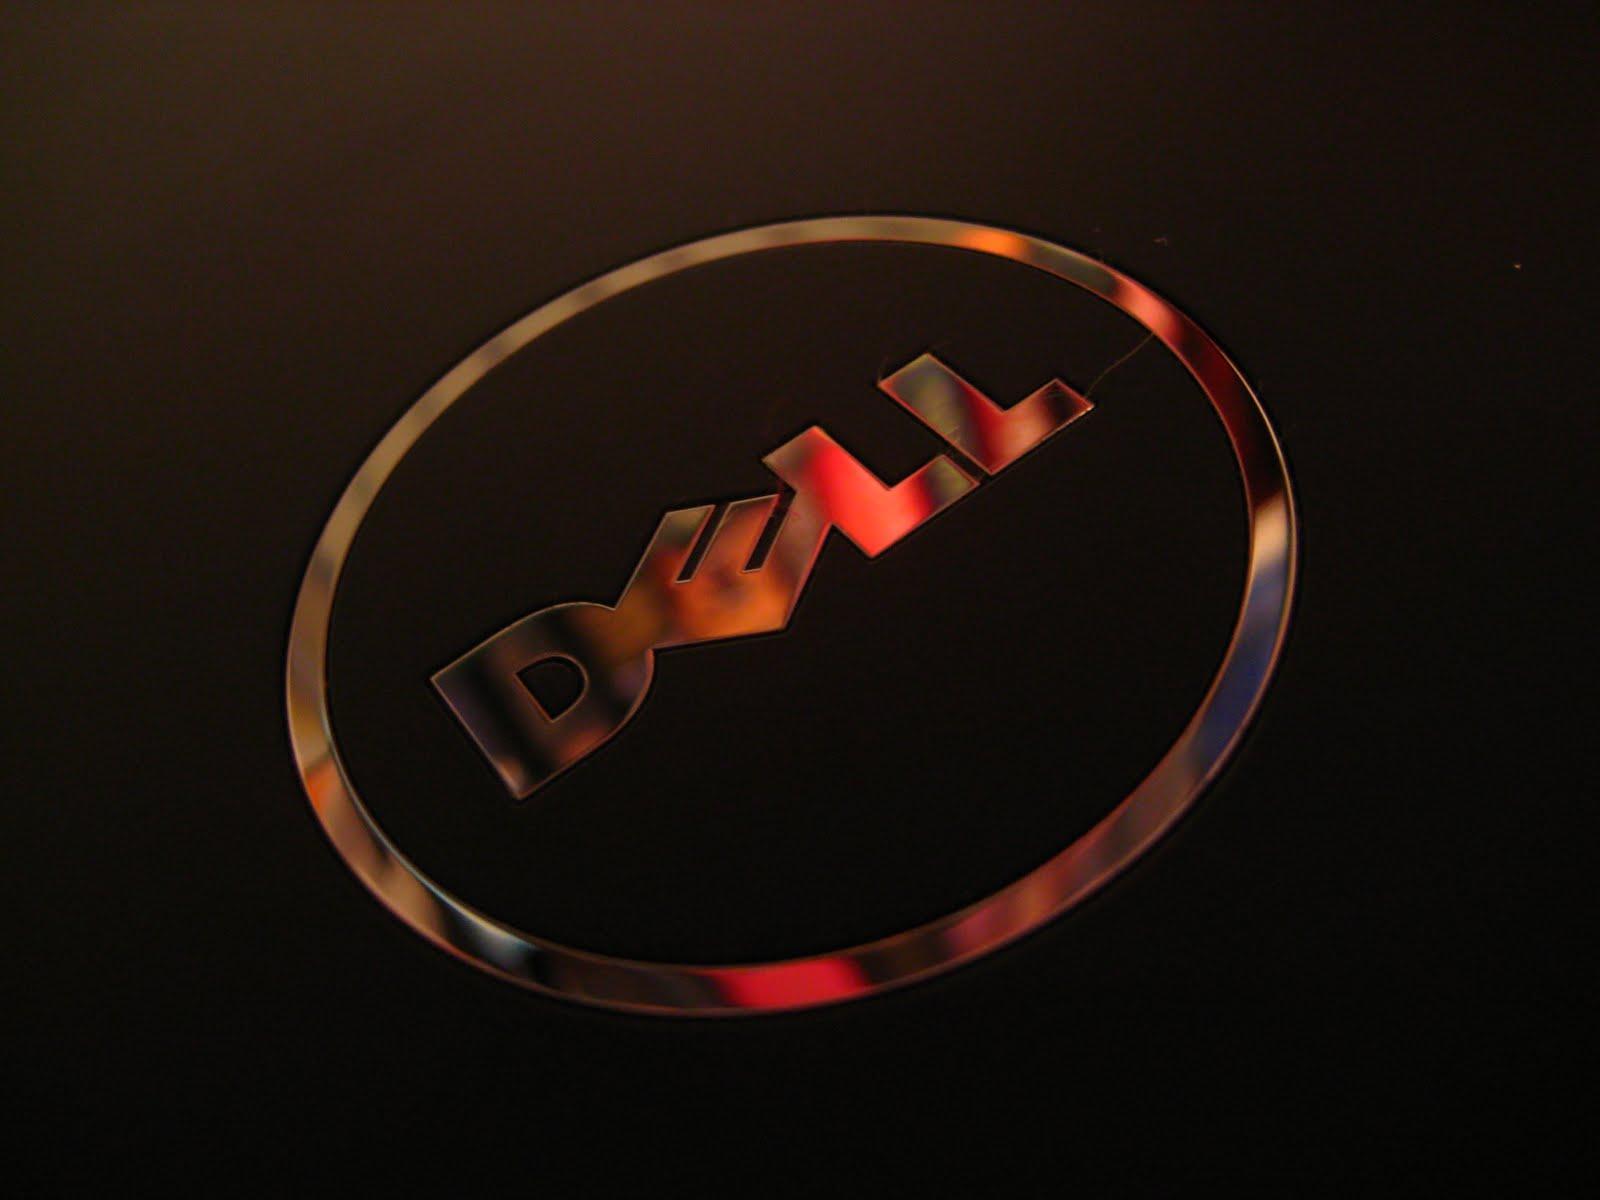 dell logo black hd